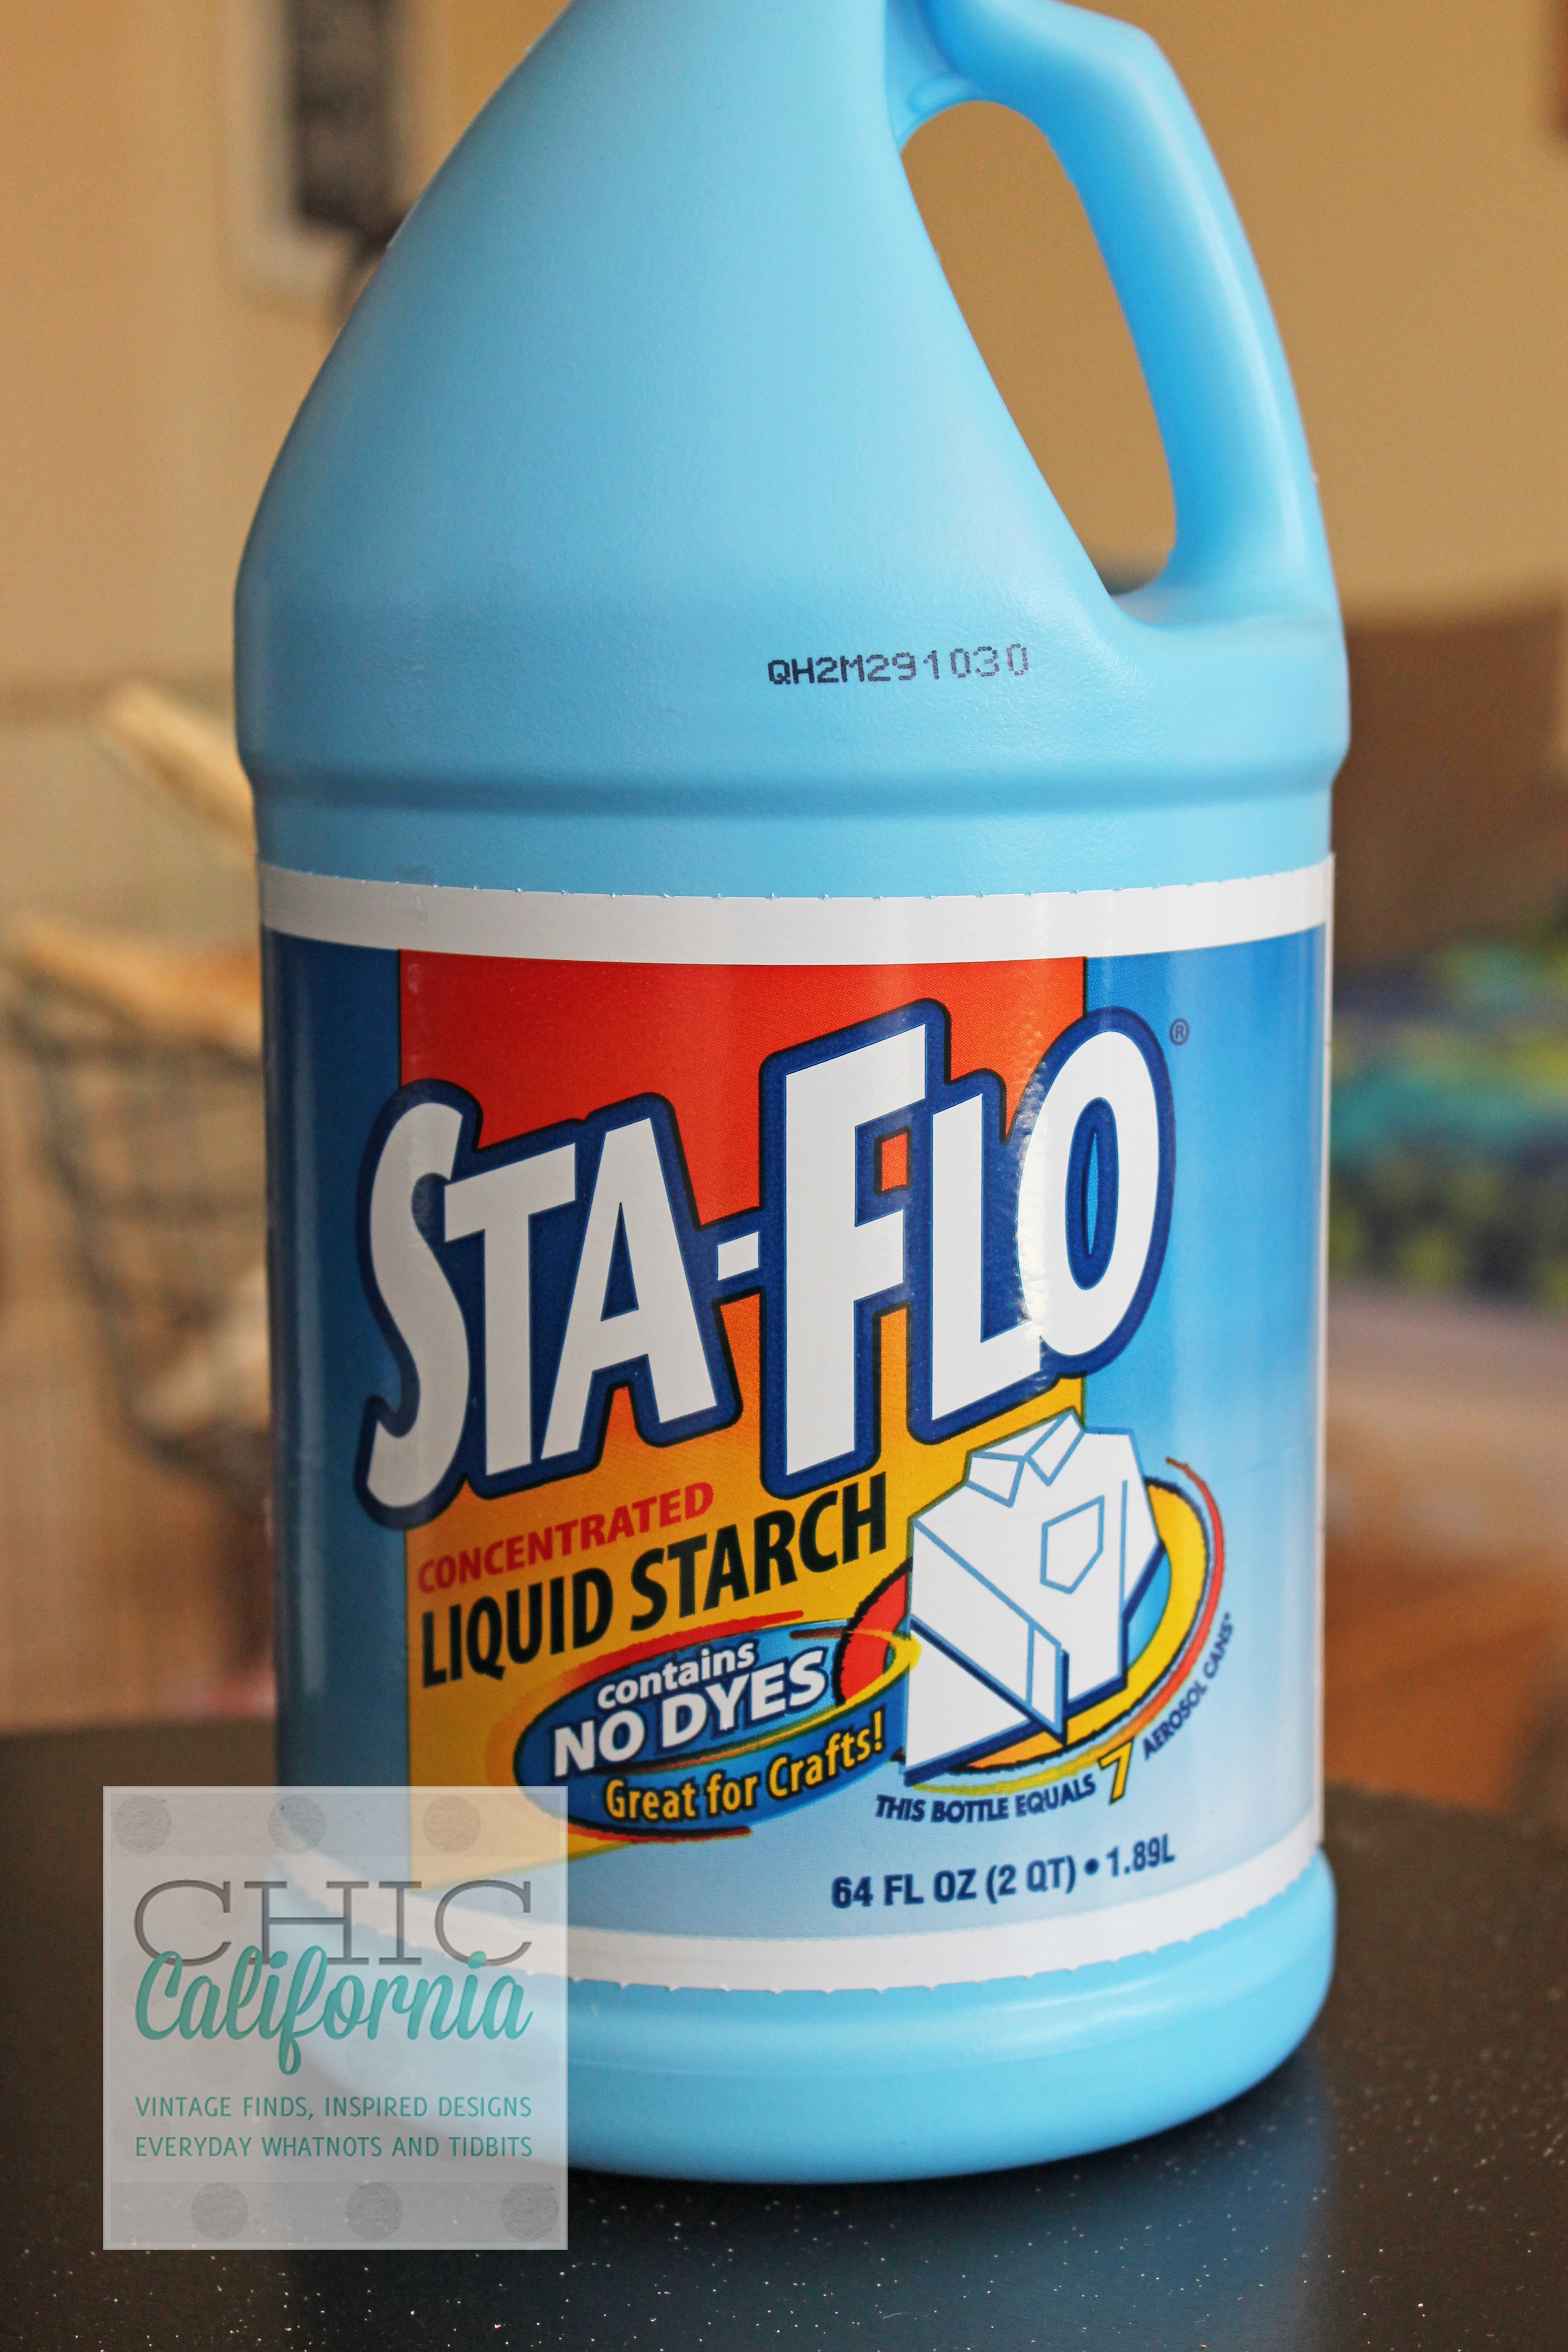 How to prepare Sta-flo liquid starch!!! 